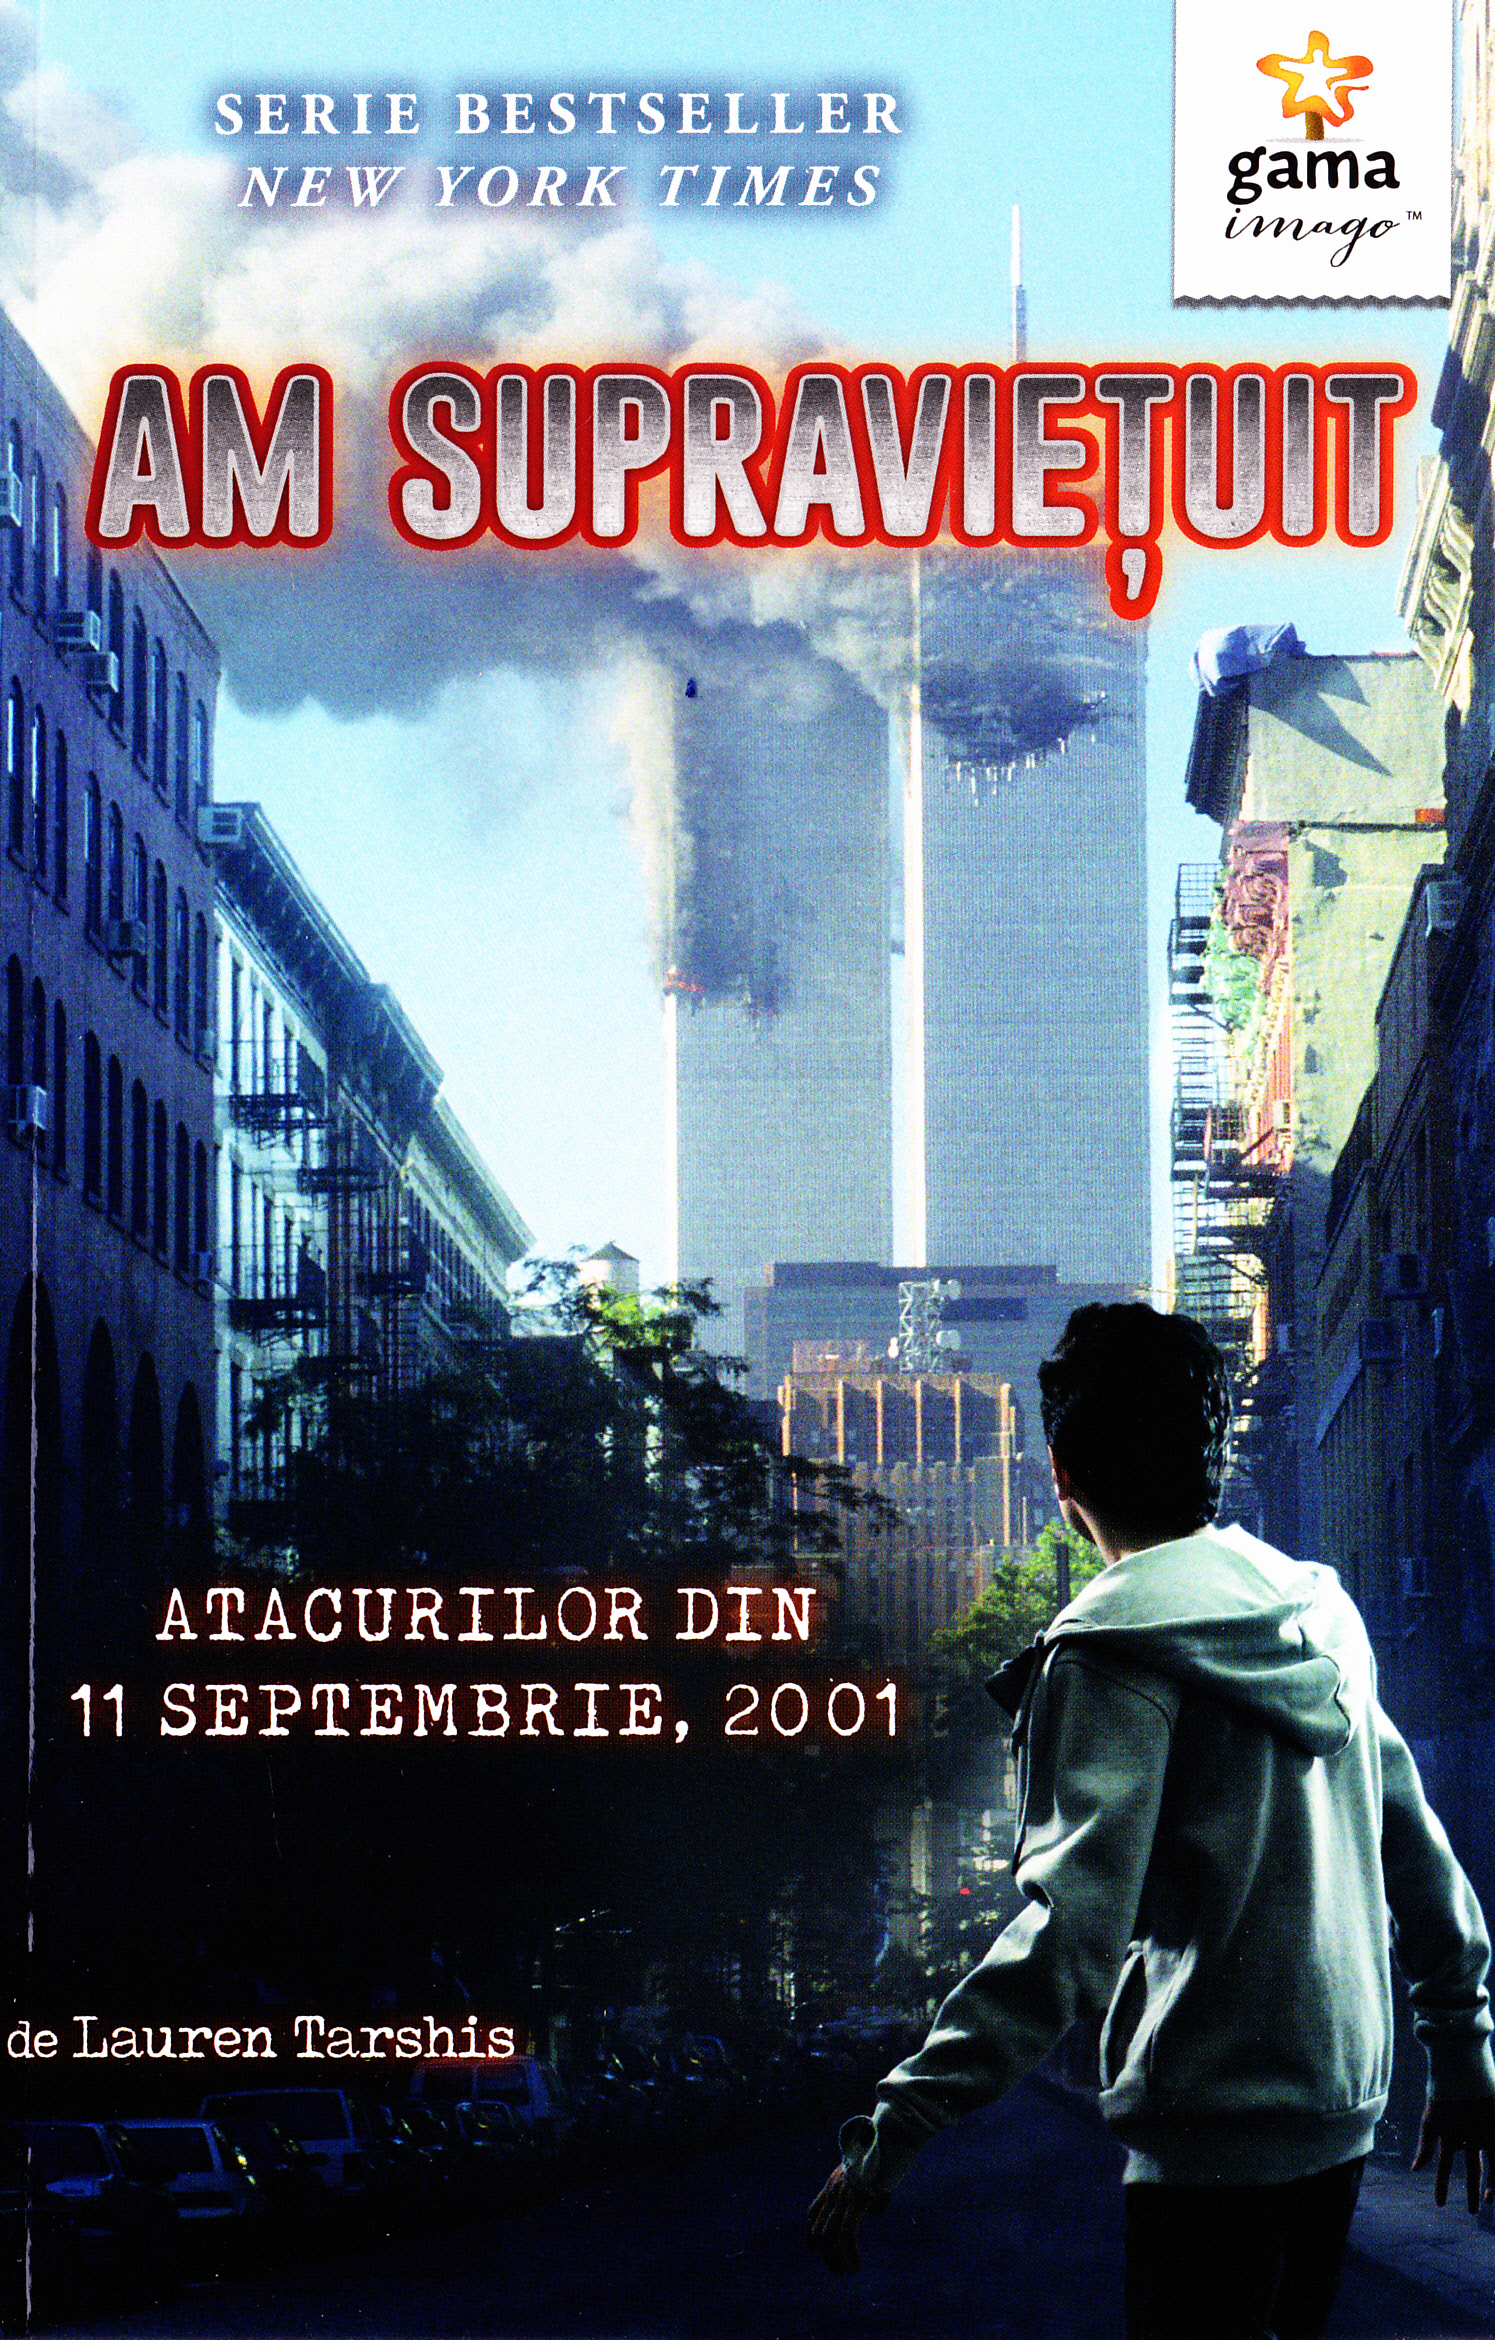 Am supravietuit atacurilor din 11 septembrie 2001 - Lauren Tarshis